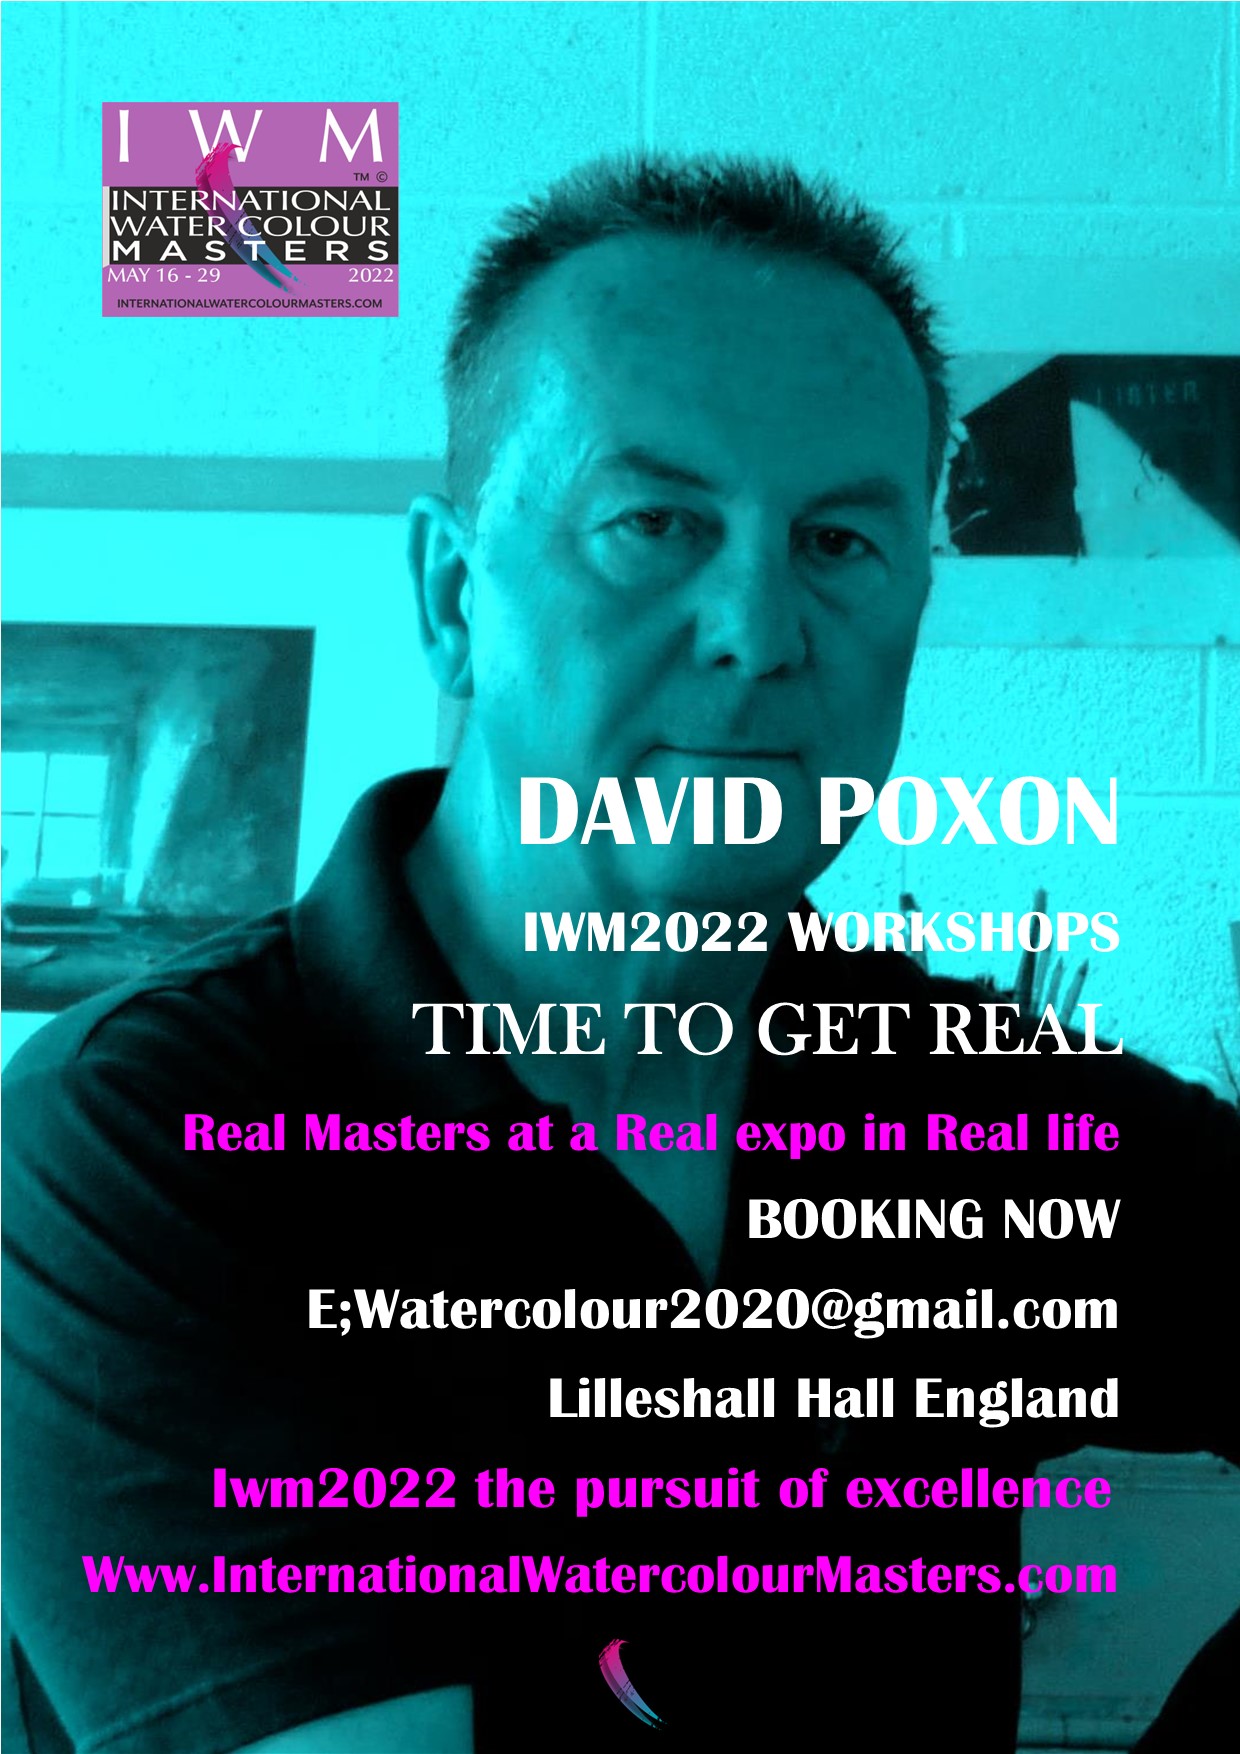 IWM Masters David Poxonn , learn David's secret watercoloor methods in a unique workshop. The Texture Master David Poxon LIVE at IWM2022.